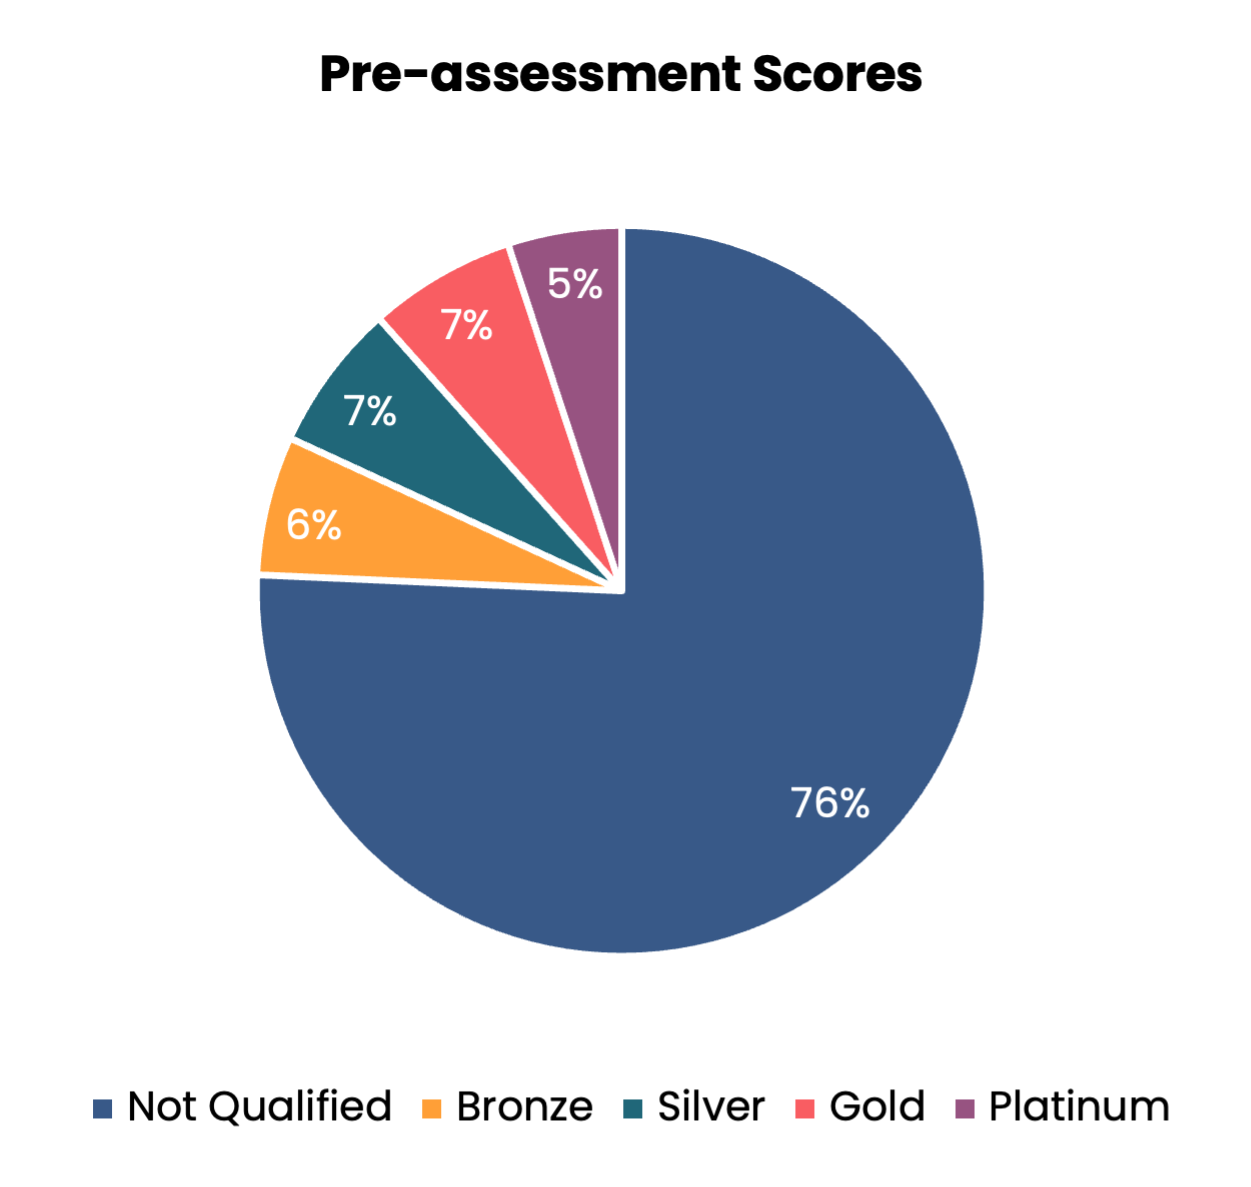 Pre-assessment Scores | Not qualified = 76% | Bronze = 6% | Silver = 7% | Gold = 7% | Platinum = 5%